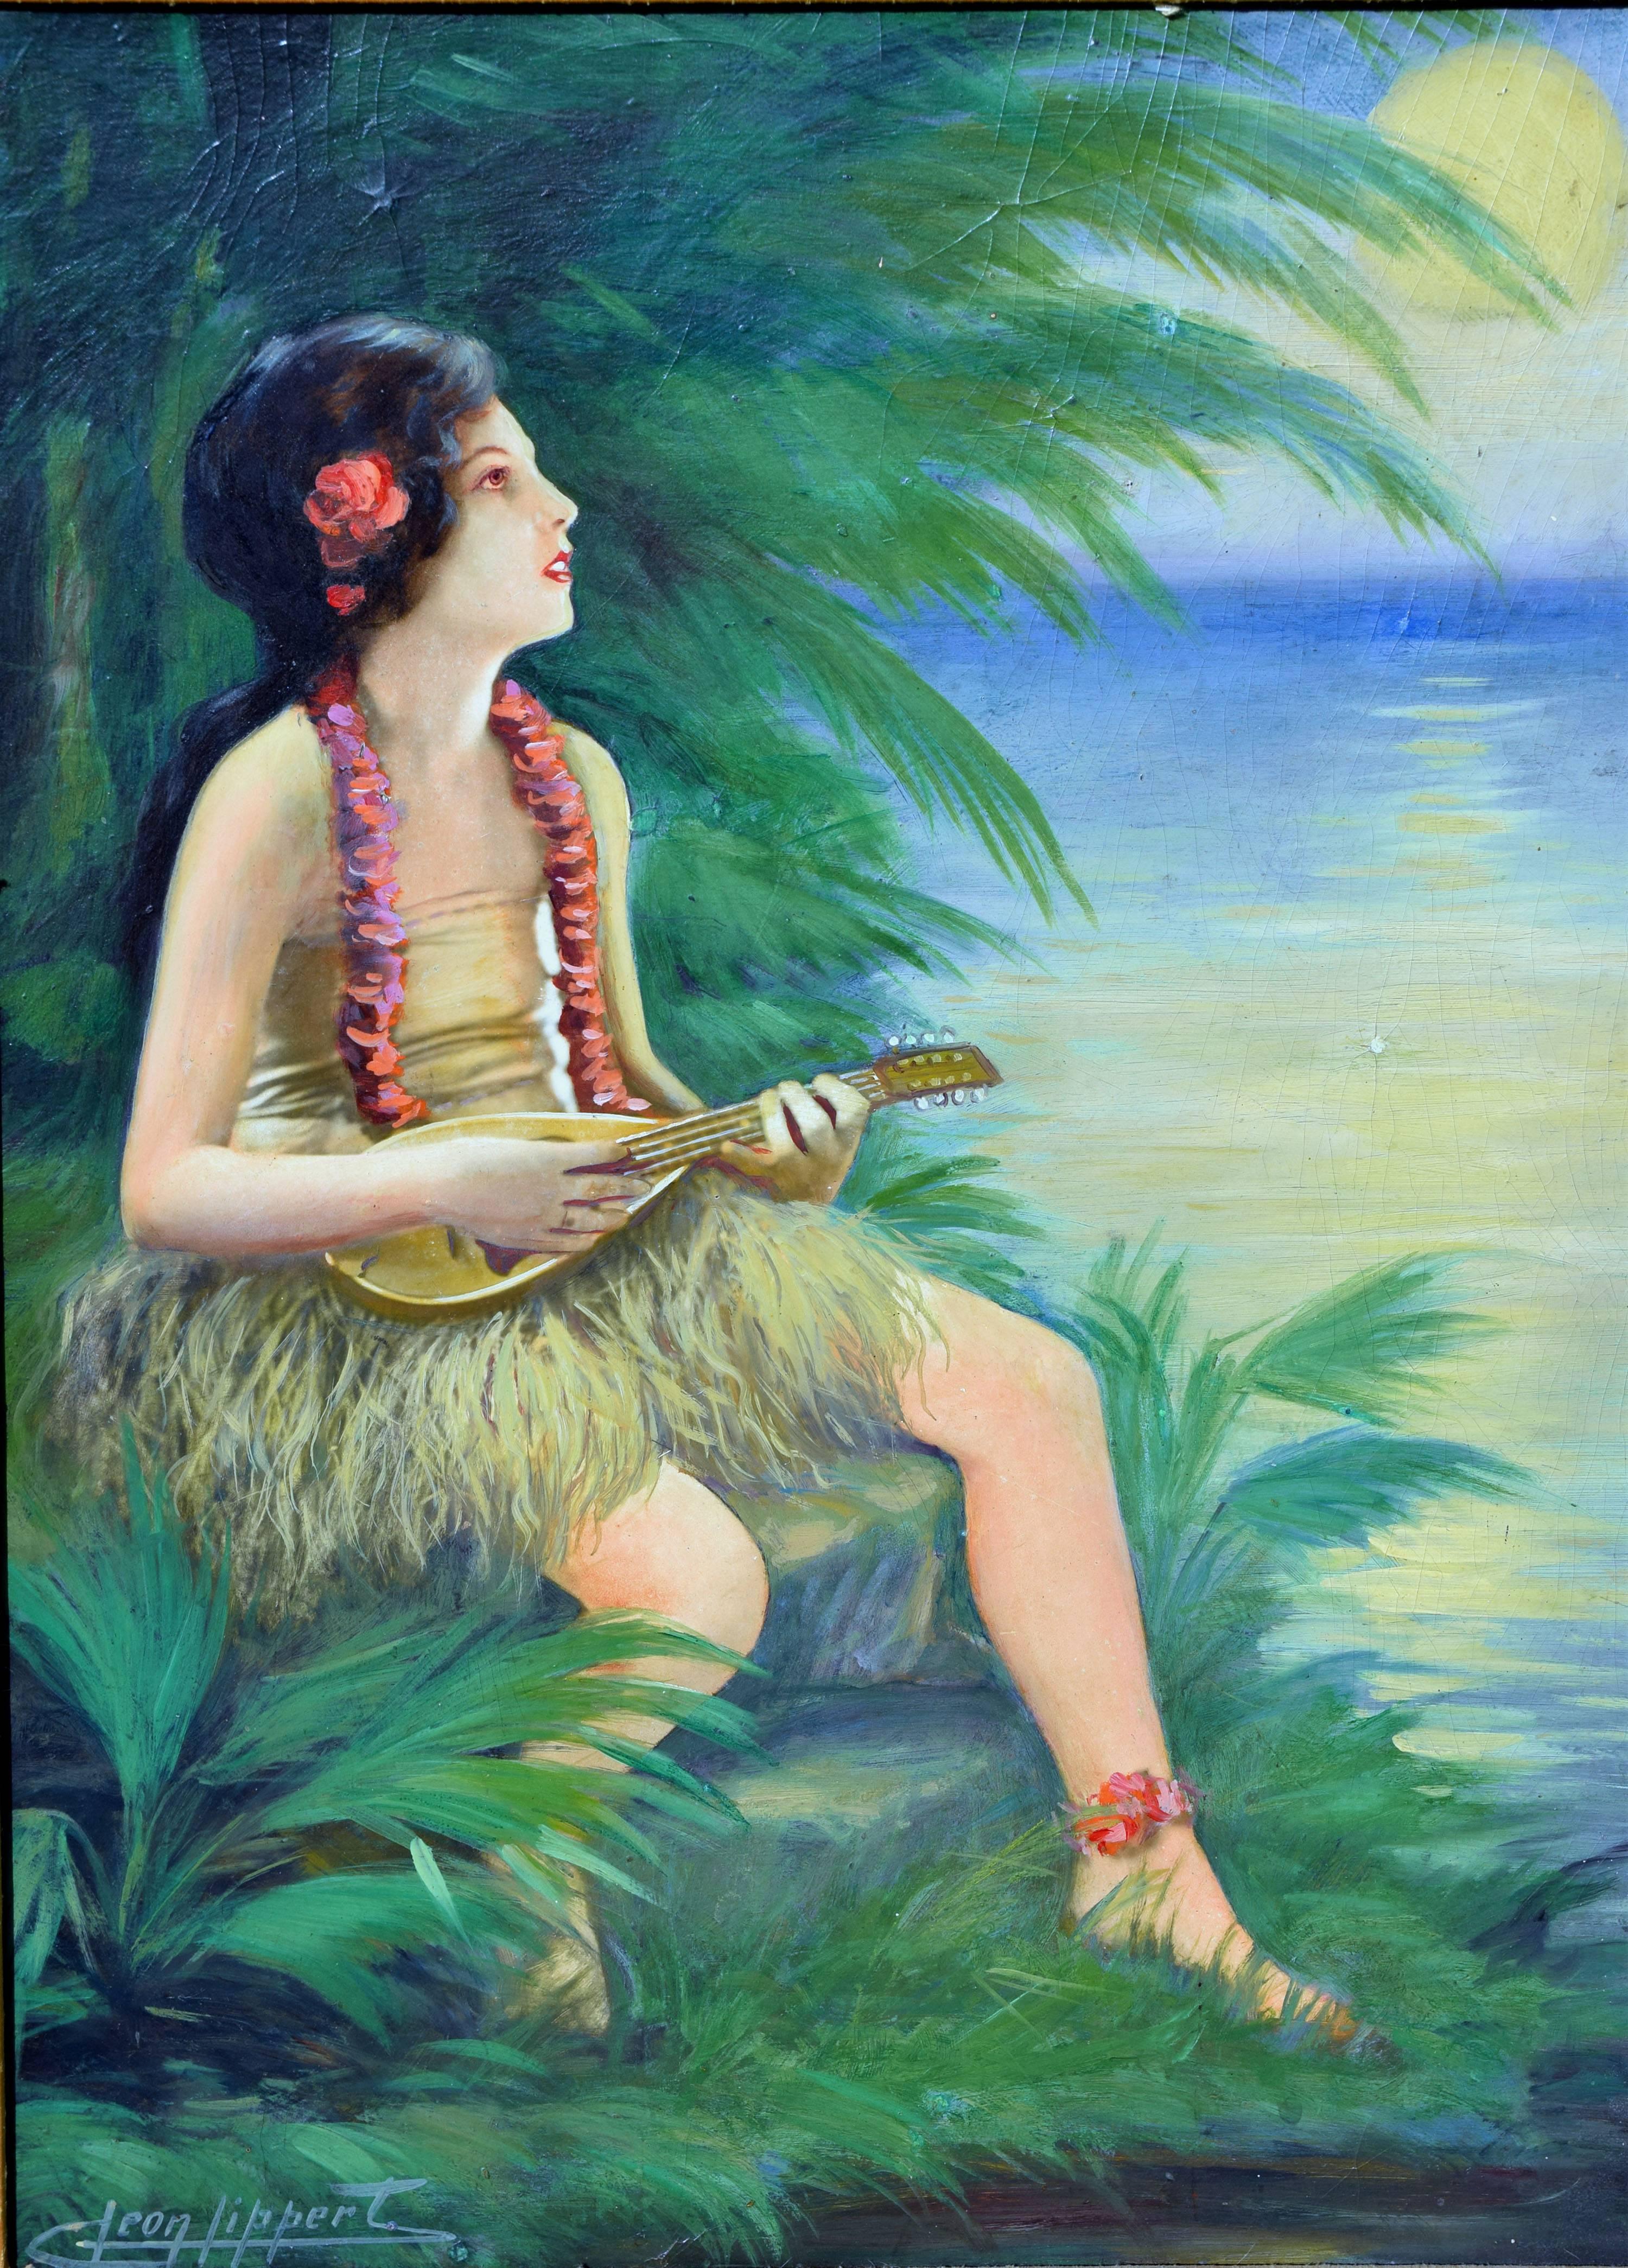 Hawaiian Girl and Ukulele  - Painting by Leon Lippert